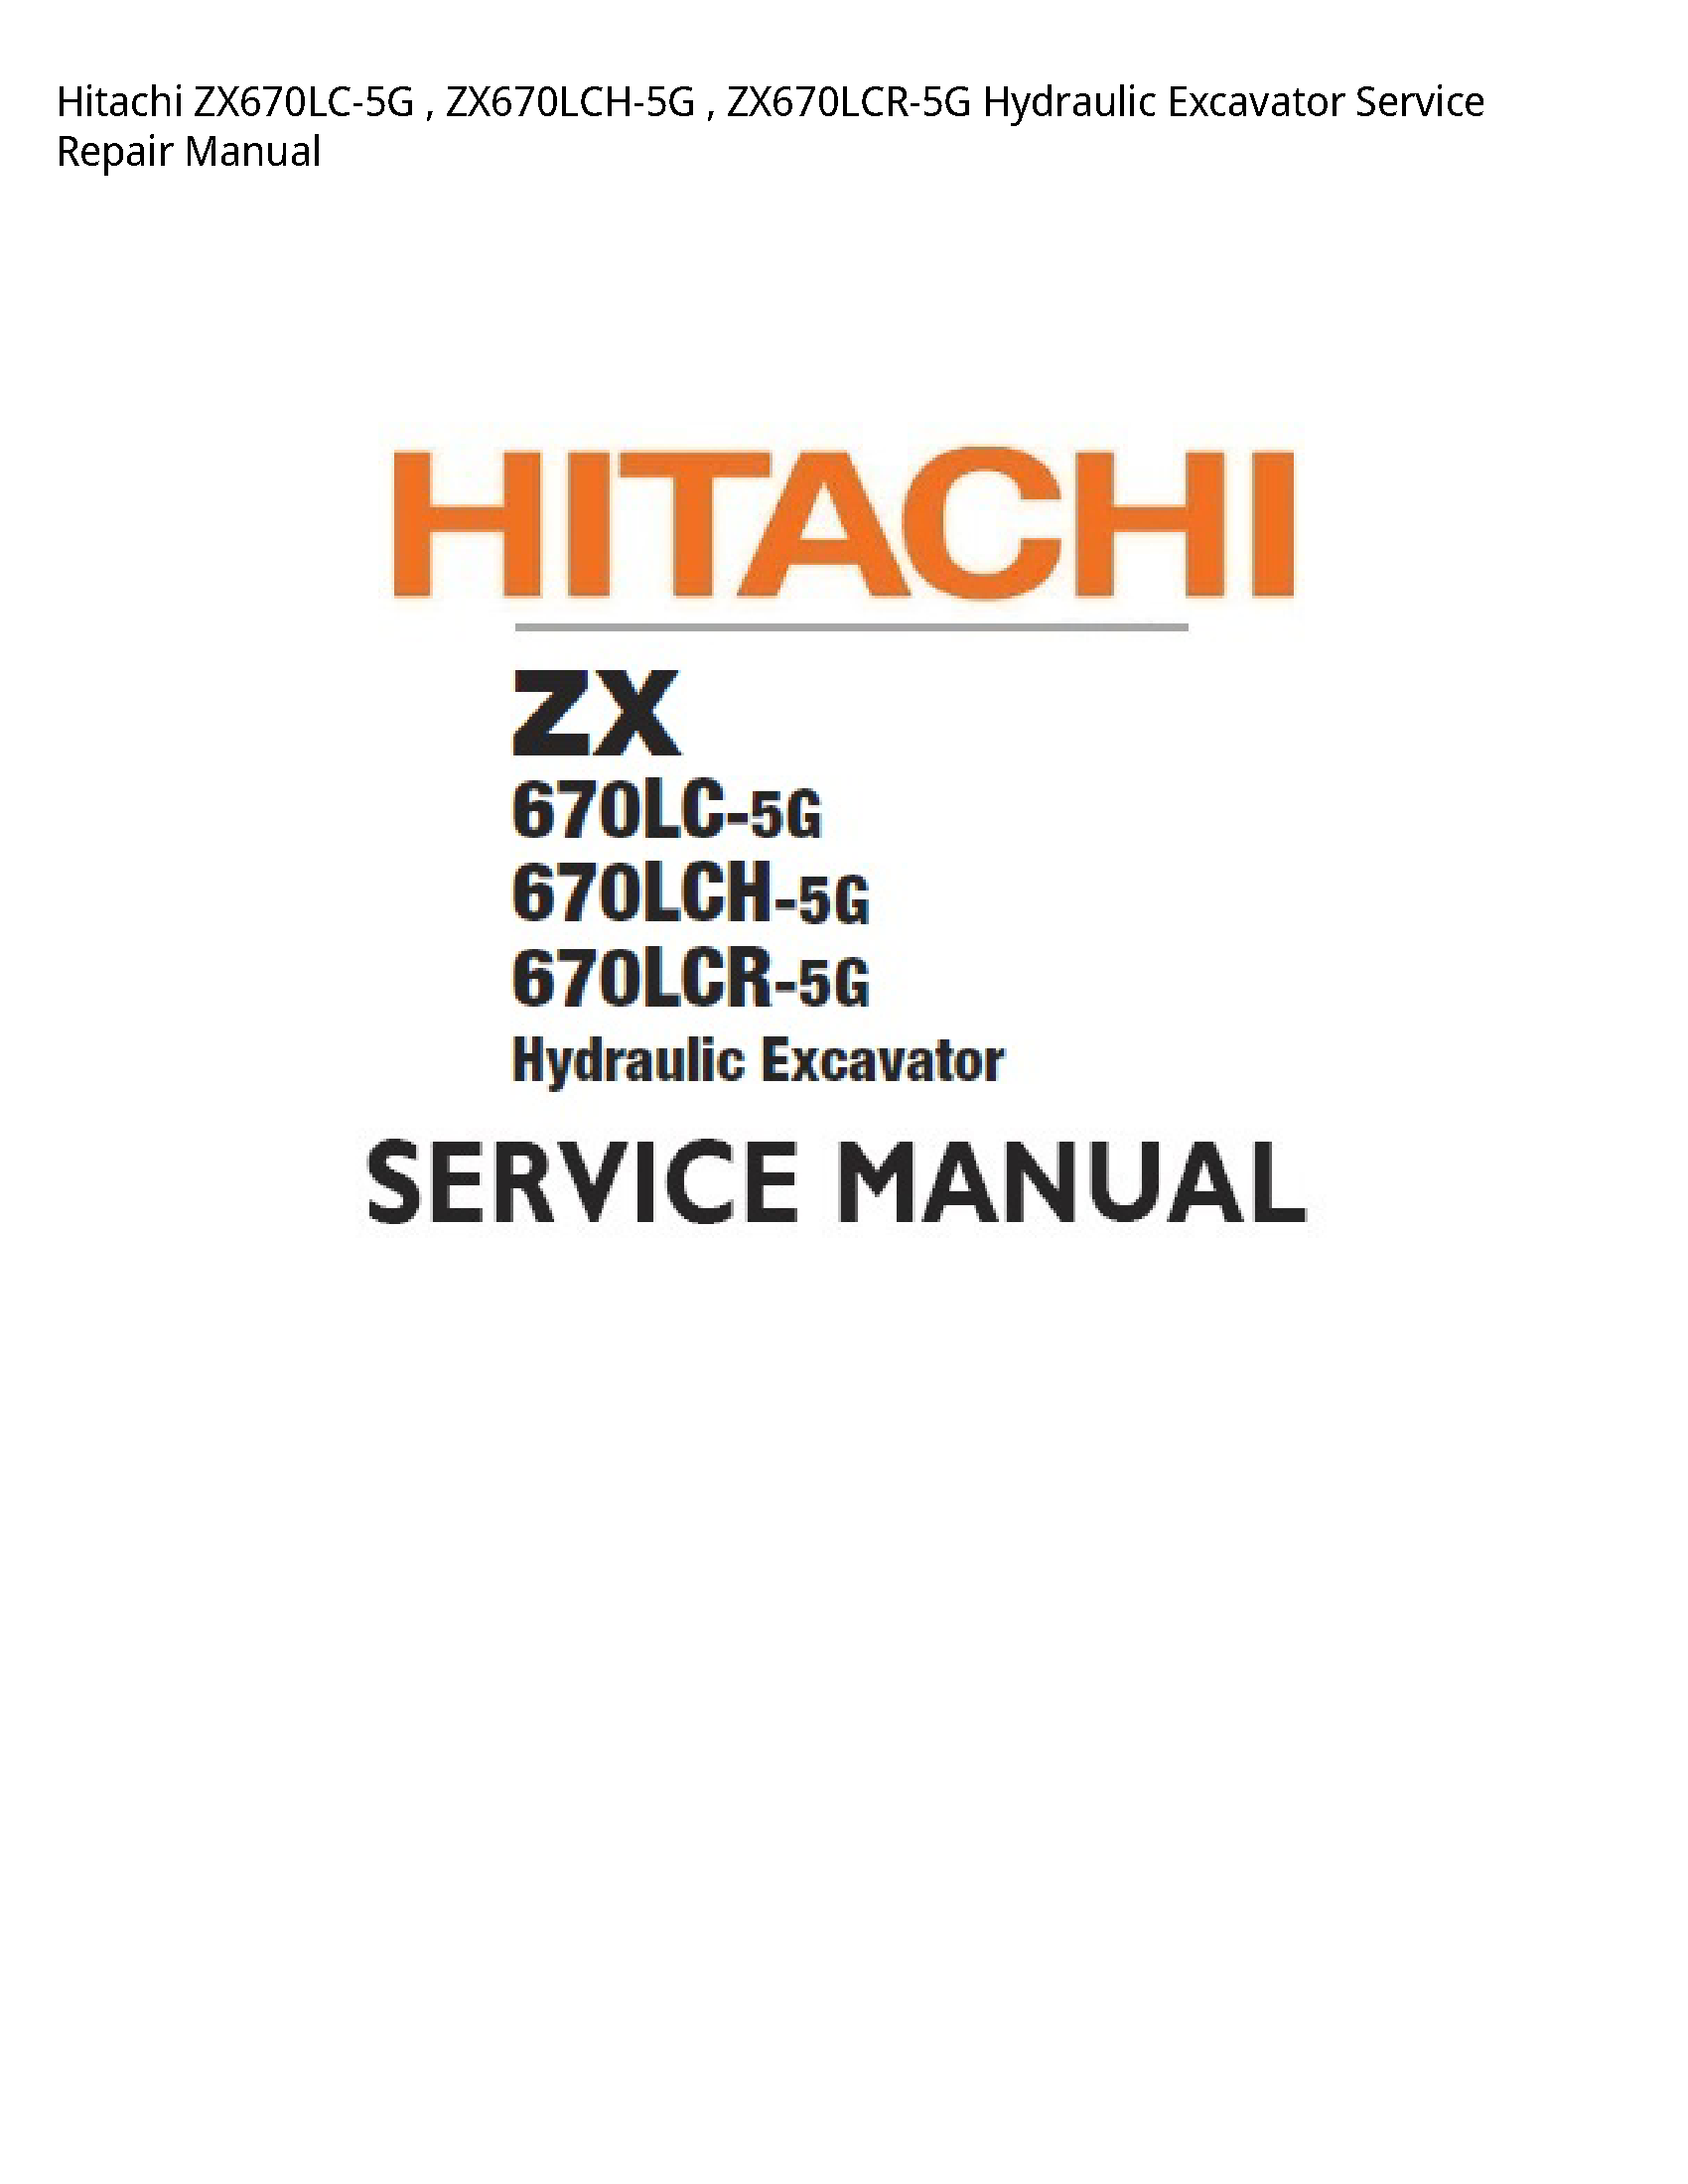 Hitachi ZX670LC-5G Hydraulic Excavator manual